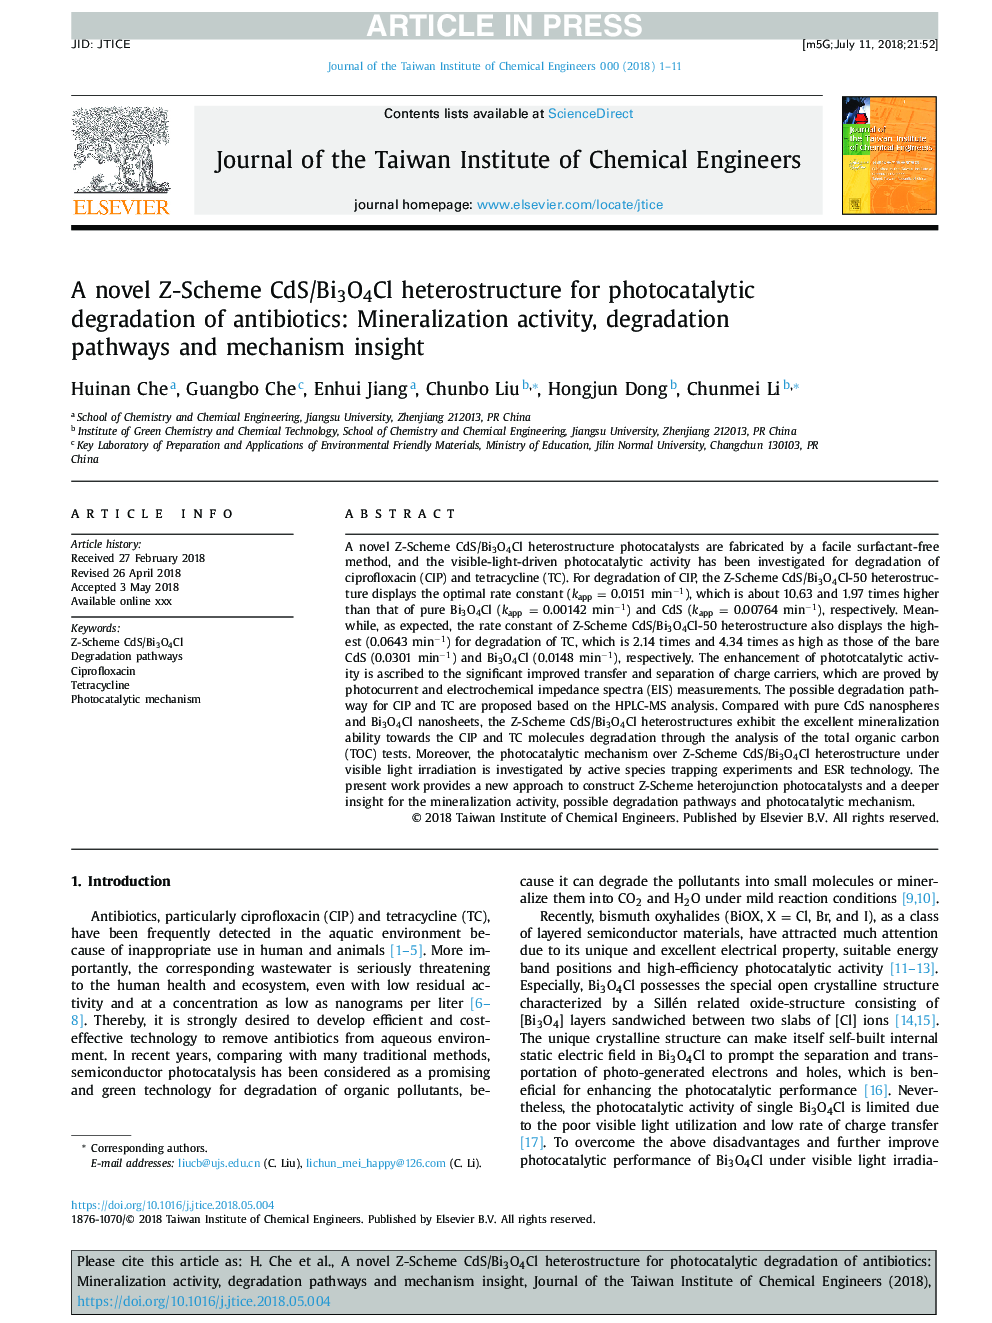 A novel Z-Scheme CdS/Bi3O4Cl heterostructure for photocatalytic degradation of antibiotics: Mineralization activity, degradation pathways and mechanism insight